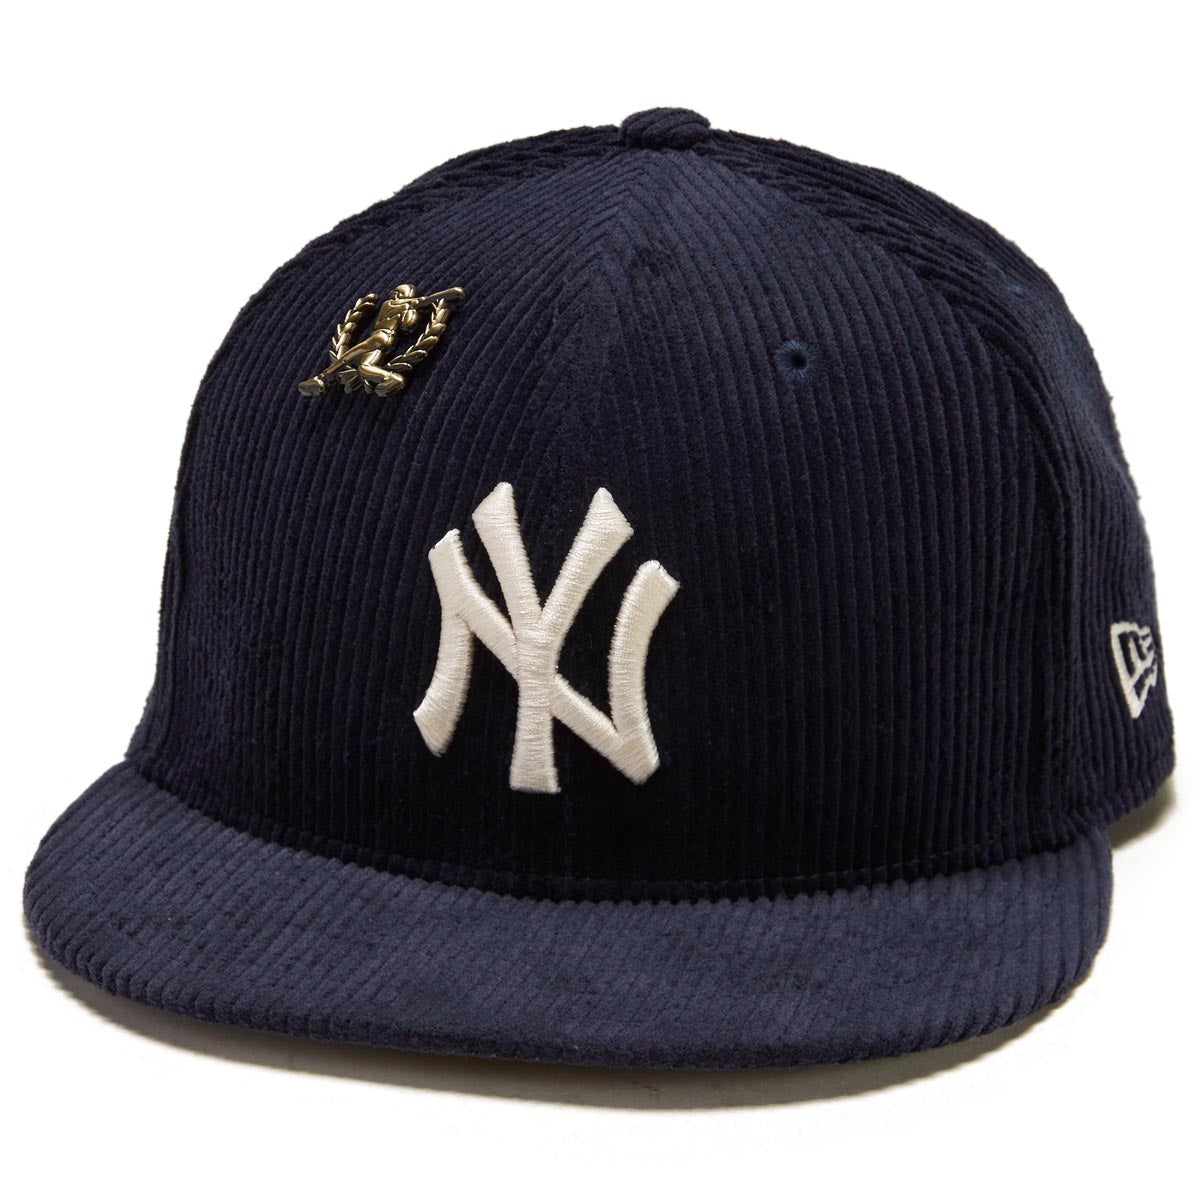 New Era 5950 Letterman Pin Hat - New York Yankees image 1